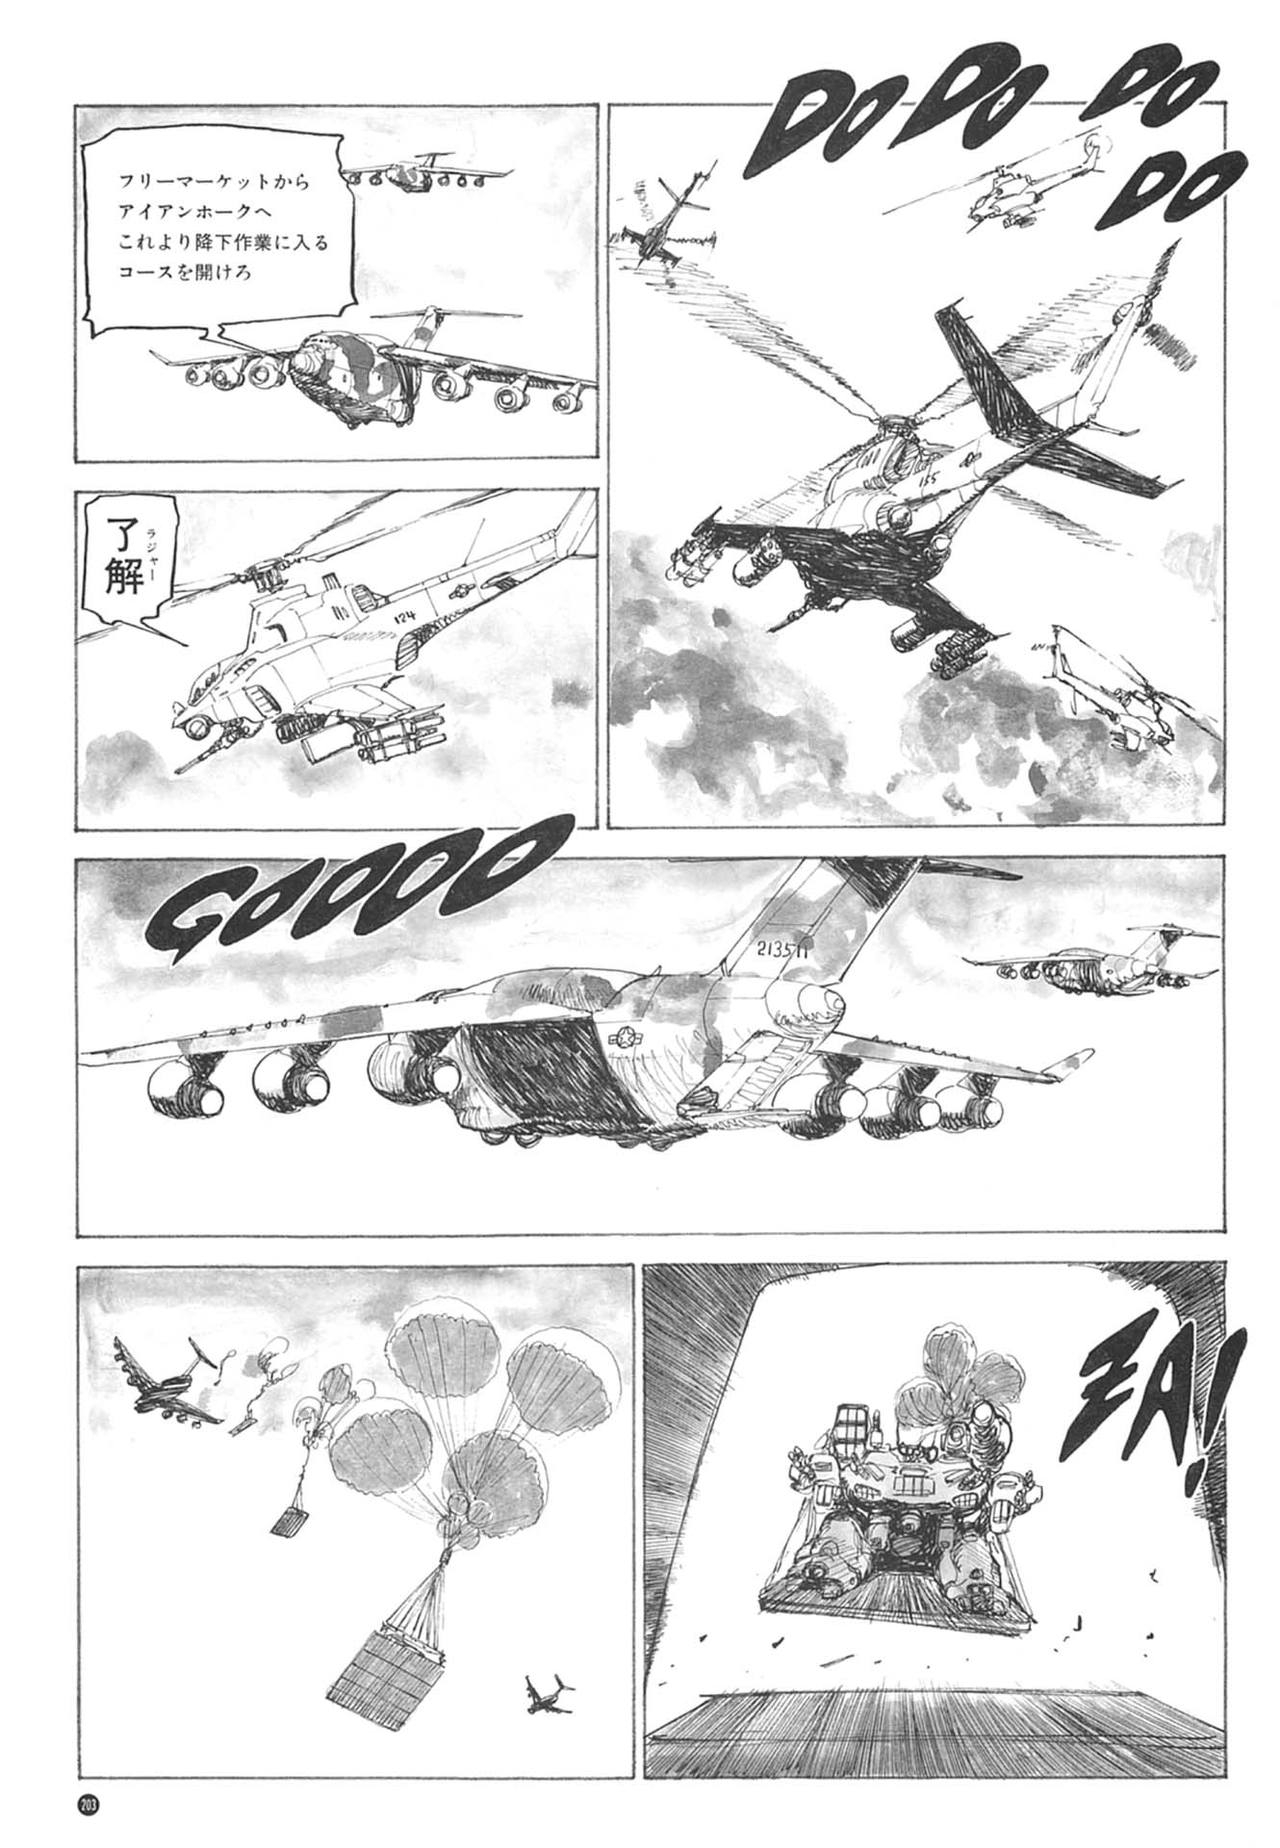 [Kazuhisa Kondo] Kazuhisa Kondo 2D & 3D Works - Go Ahead - From Mobile Suit Gundam to Original Mechanism 202